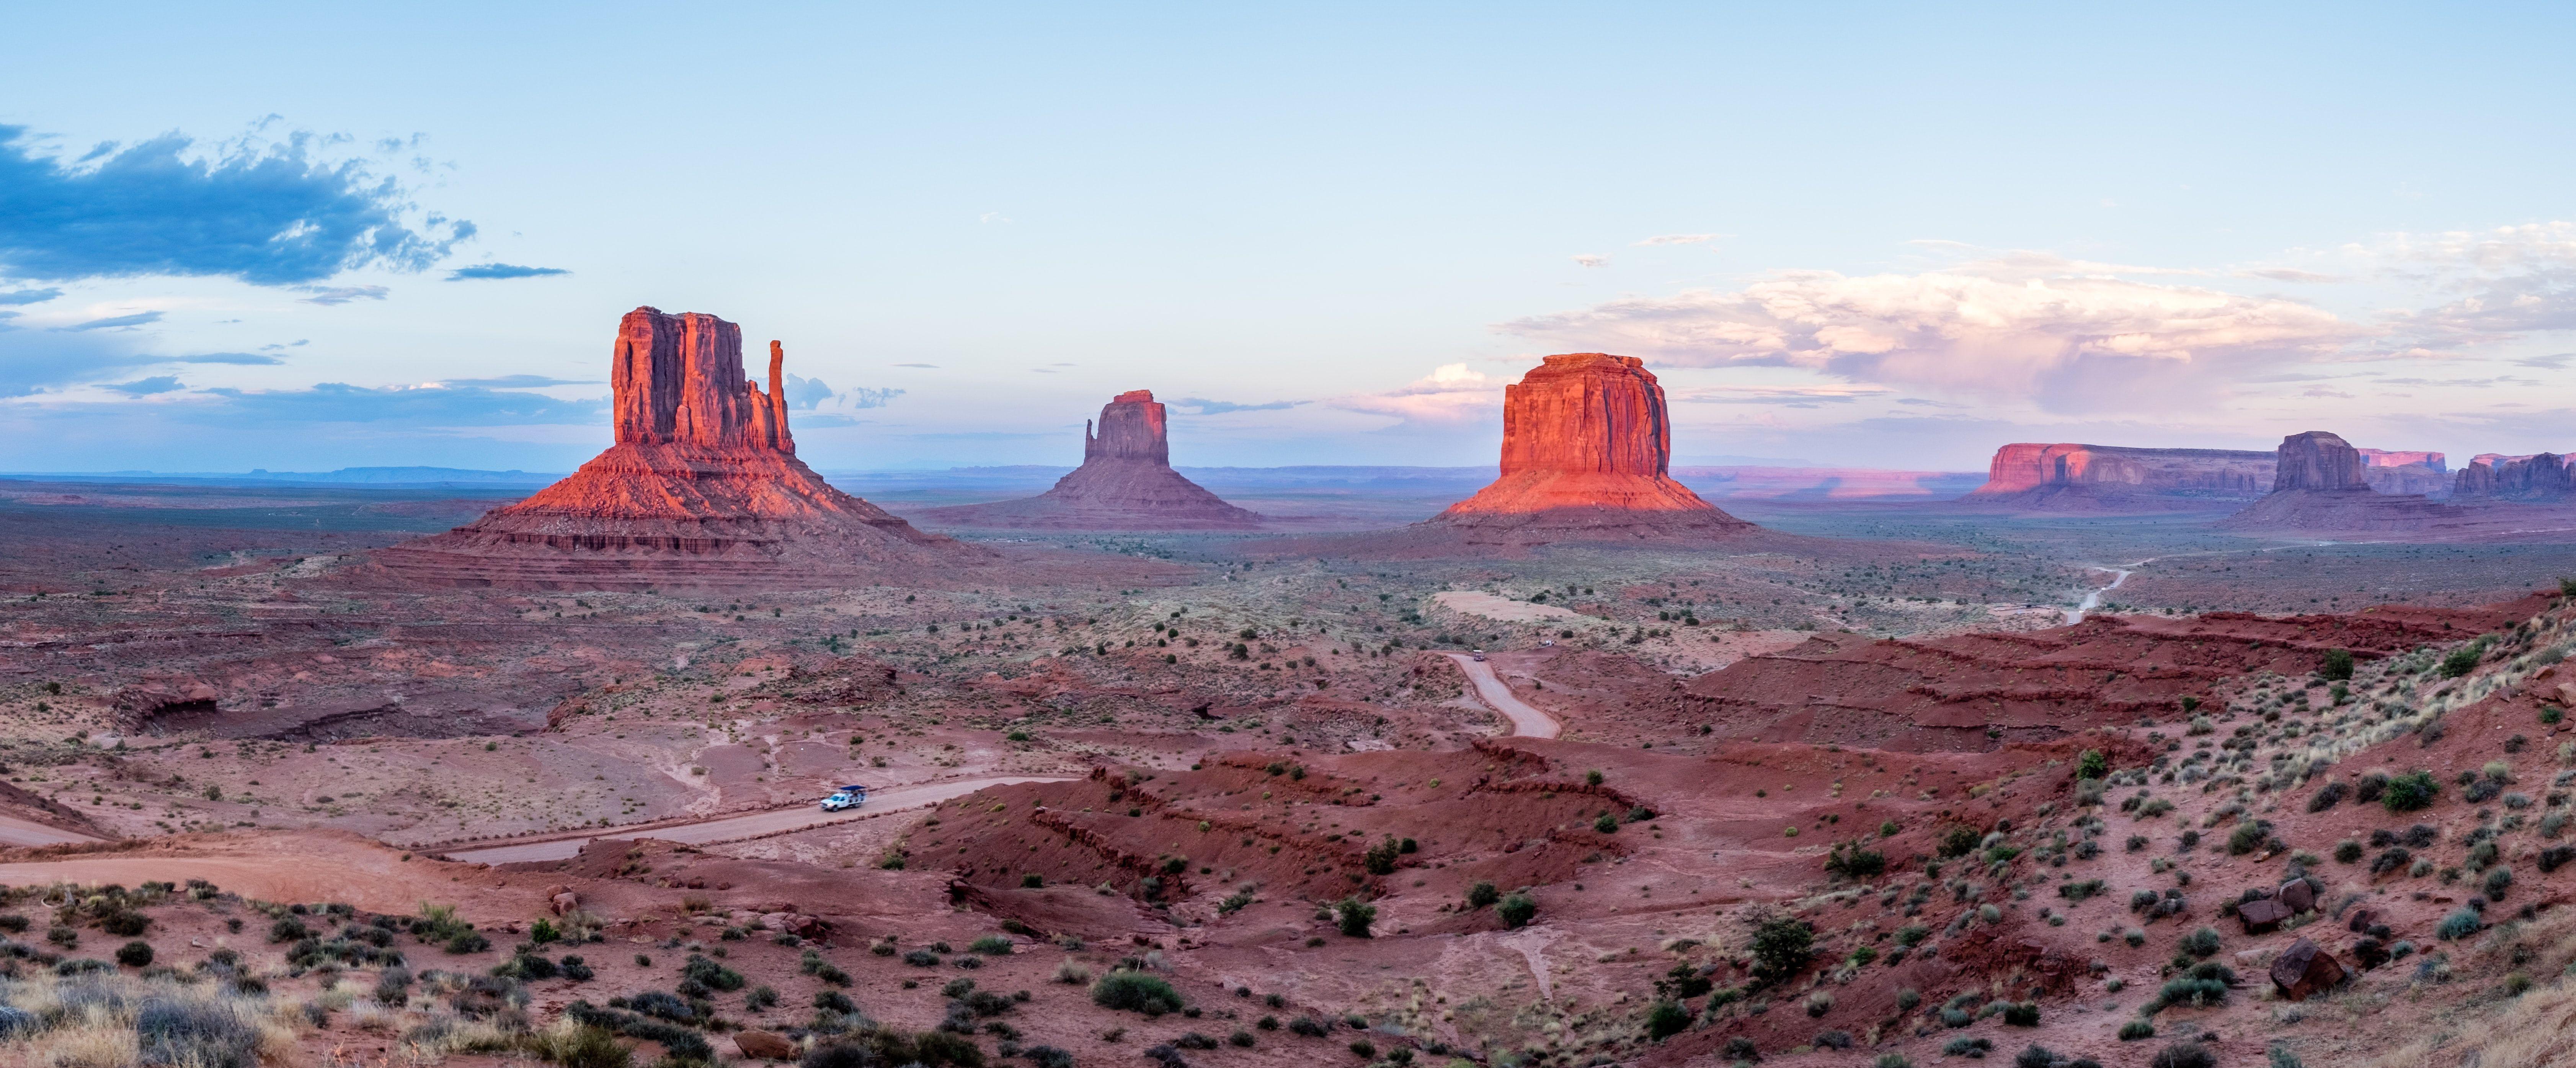 Wild West Landscape Wallpapers - Top Free Wild West Landscape ...